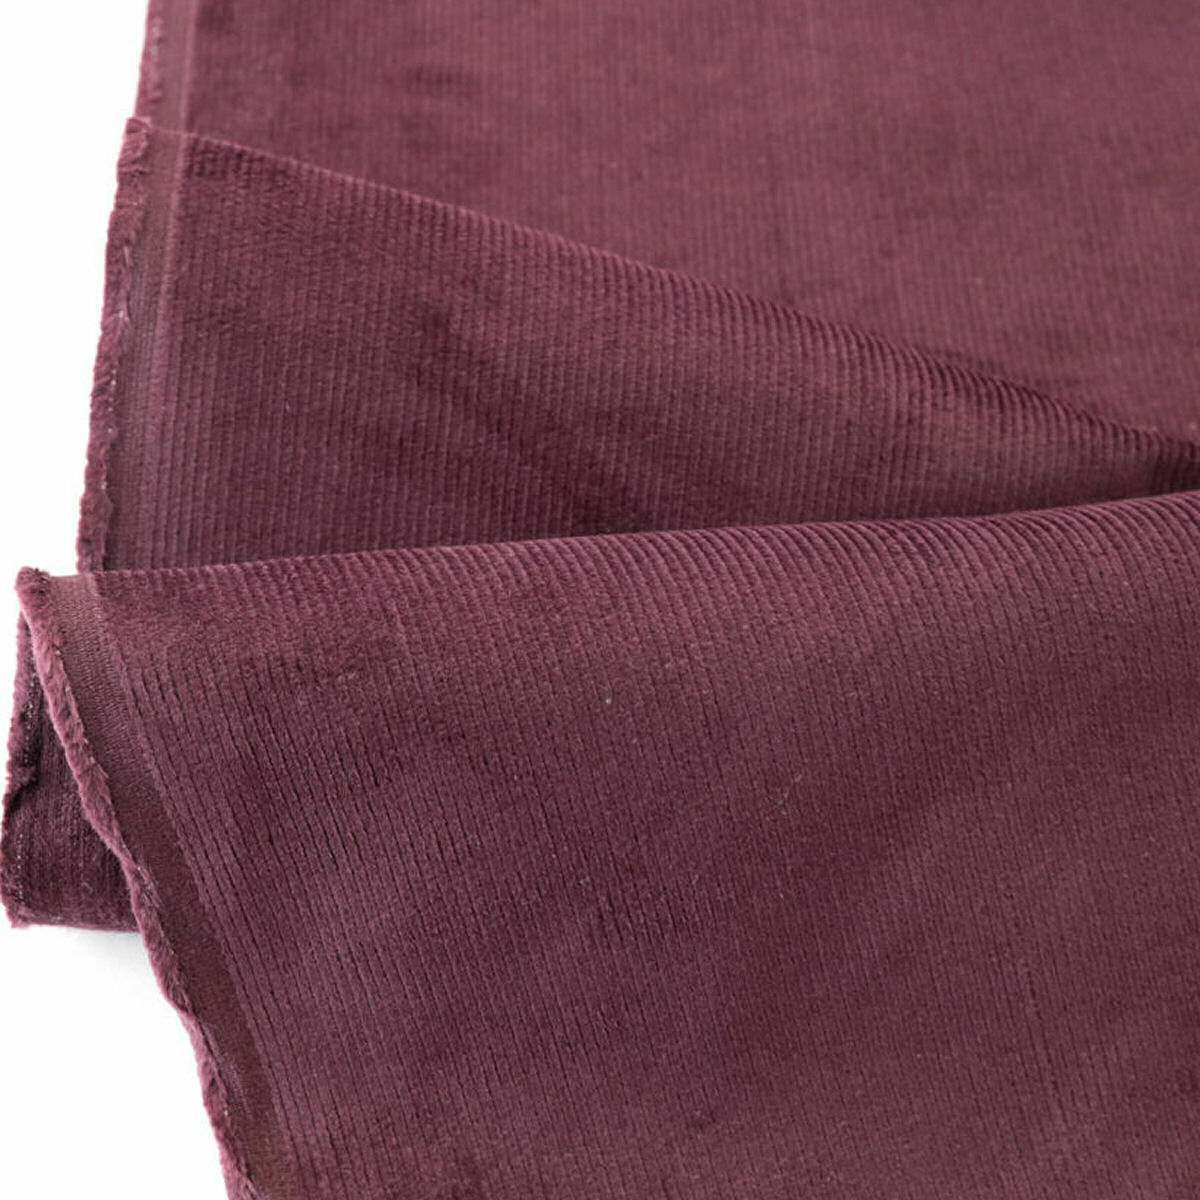 Stretch CORD Violett Baumwoll-Stoff Bekleidung Hose Jacke Polsterstoff Meterware